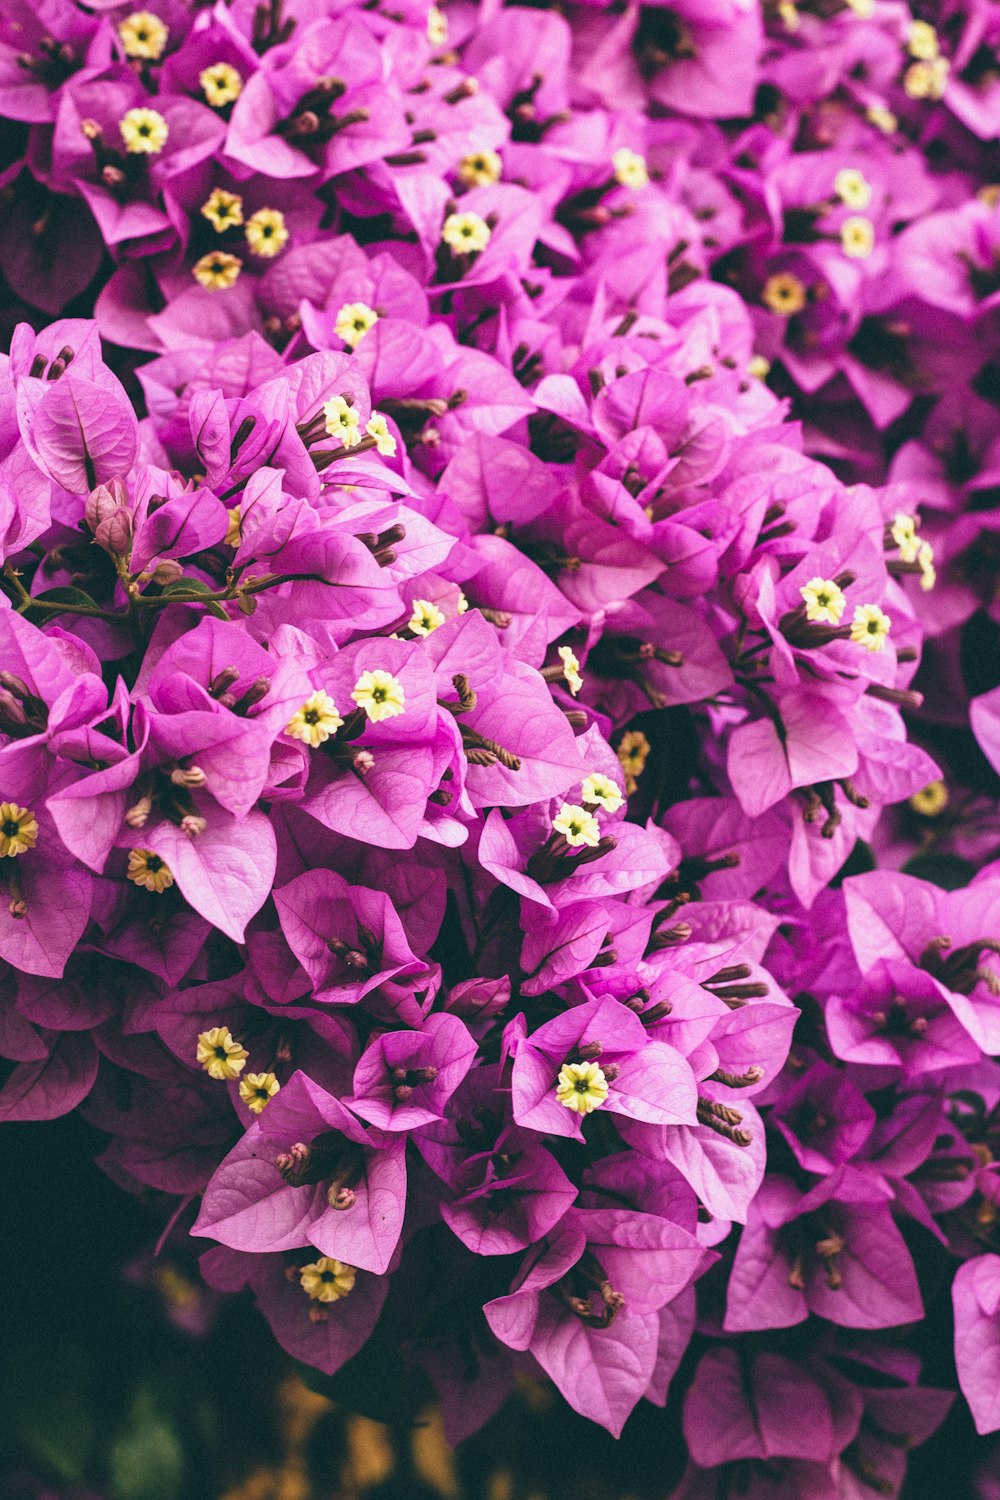 Fotografia de foco raso de plantas de folhas cor-de-rosa